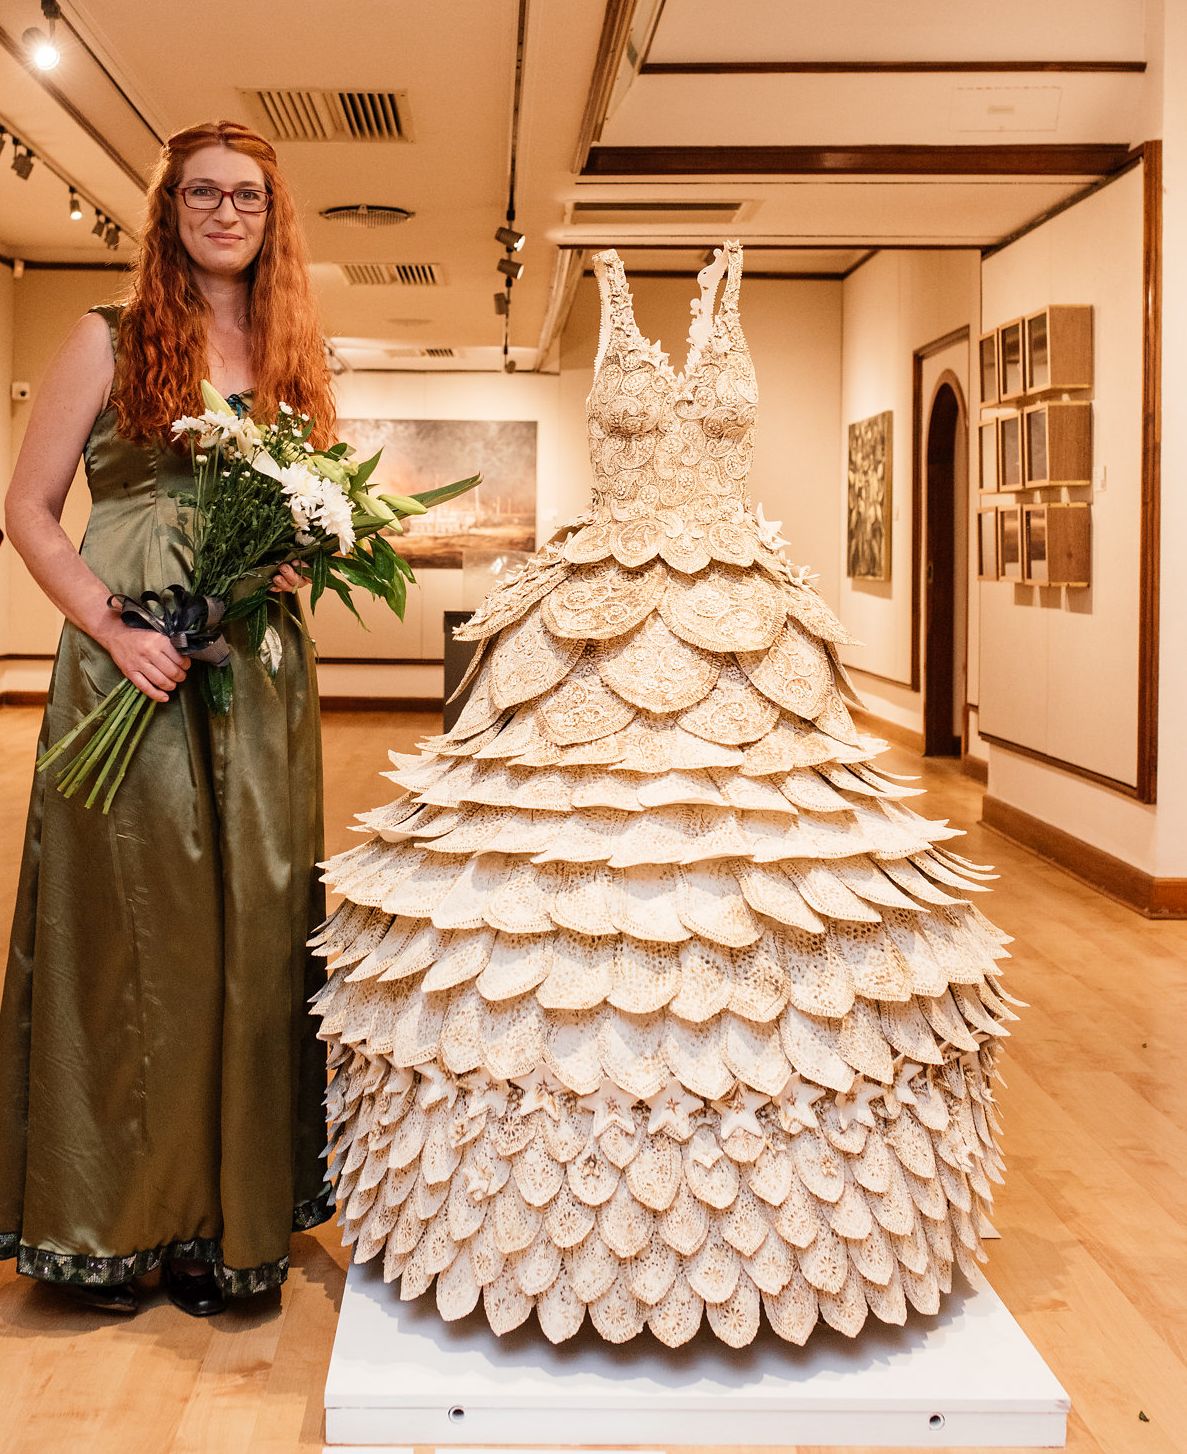 Ceramic wedding dress named Runner-up of the 2016 Phatshoane Henney New Breed Art Competition